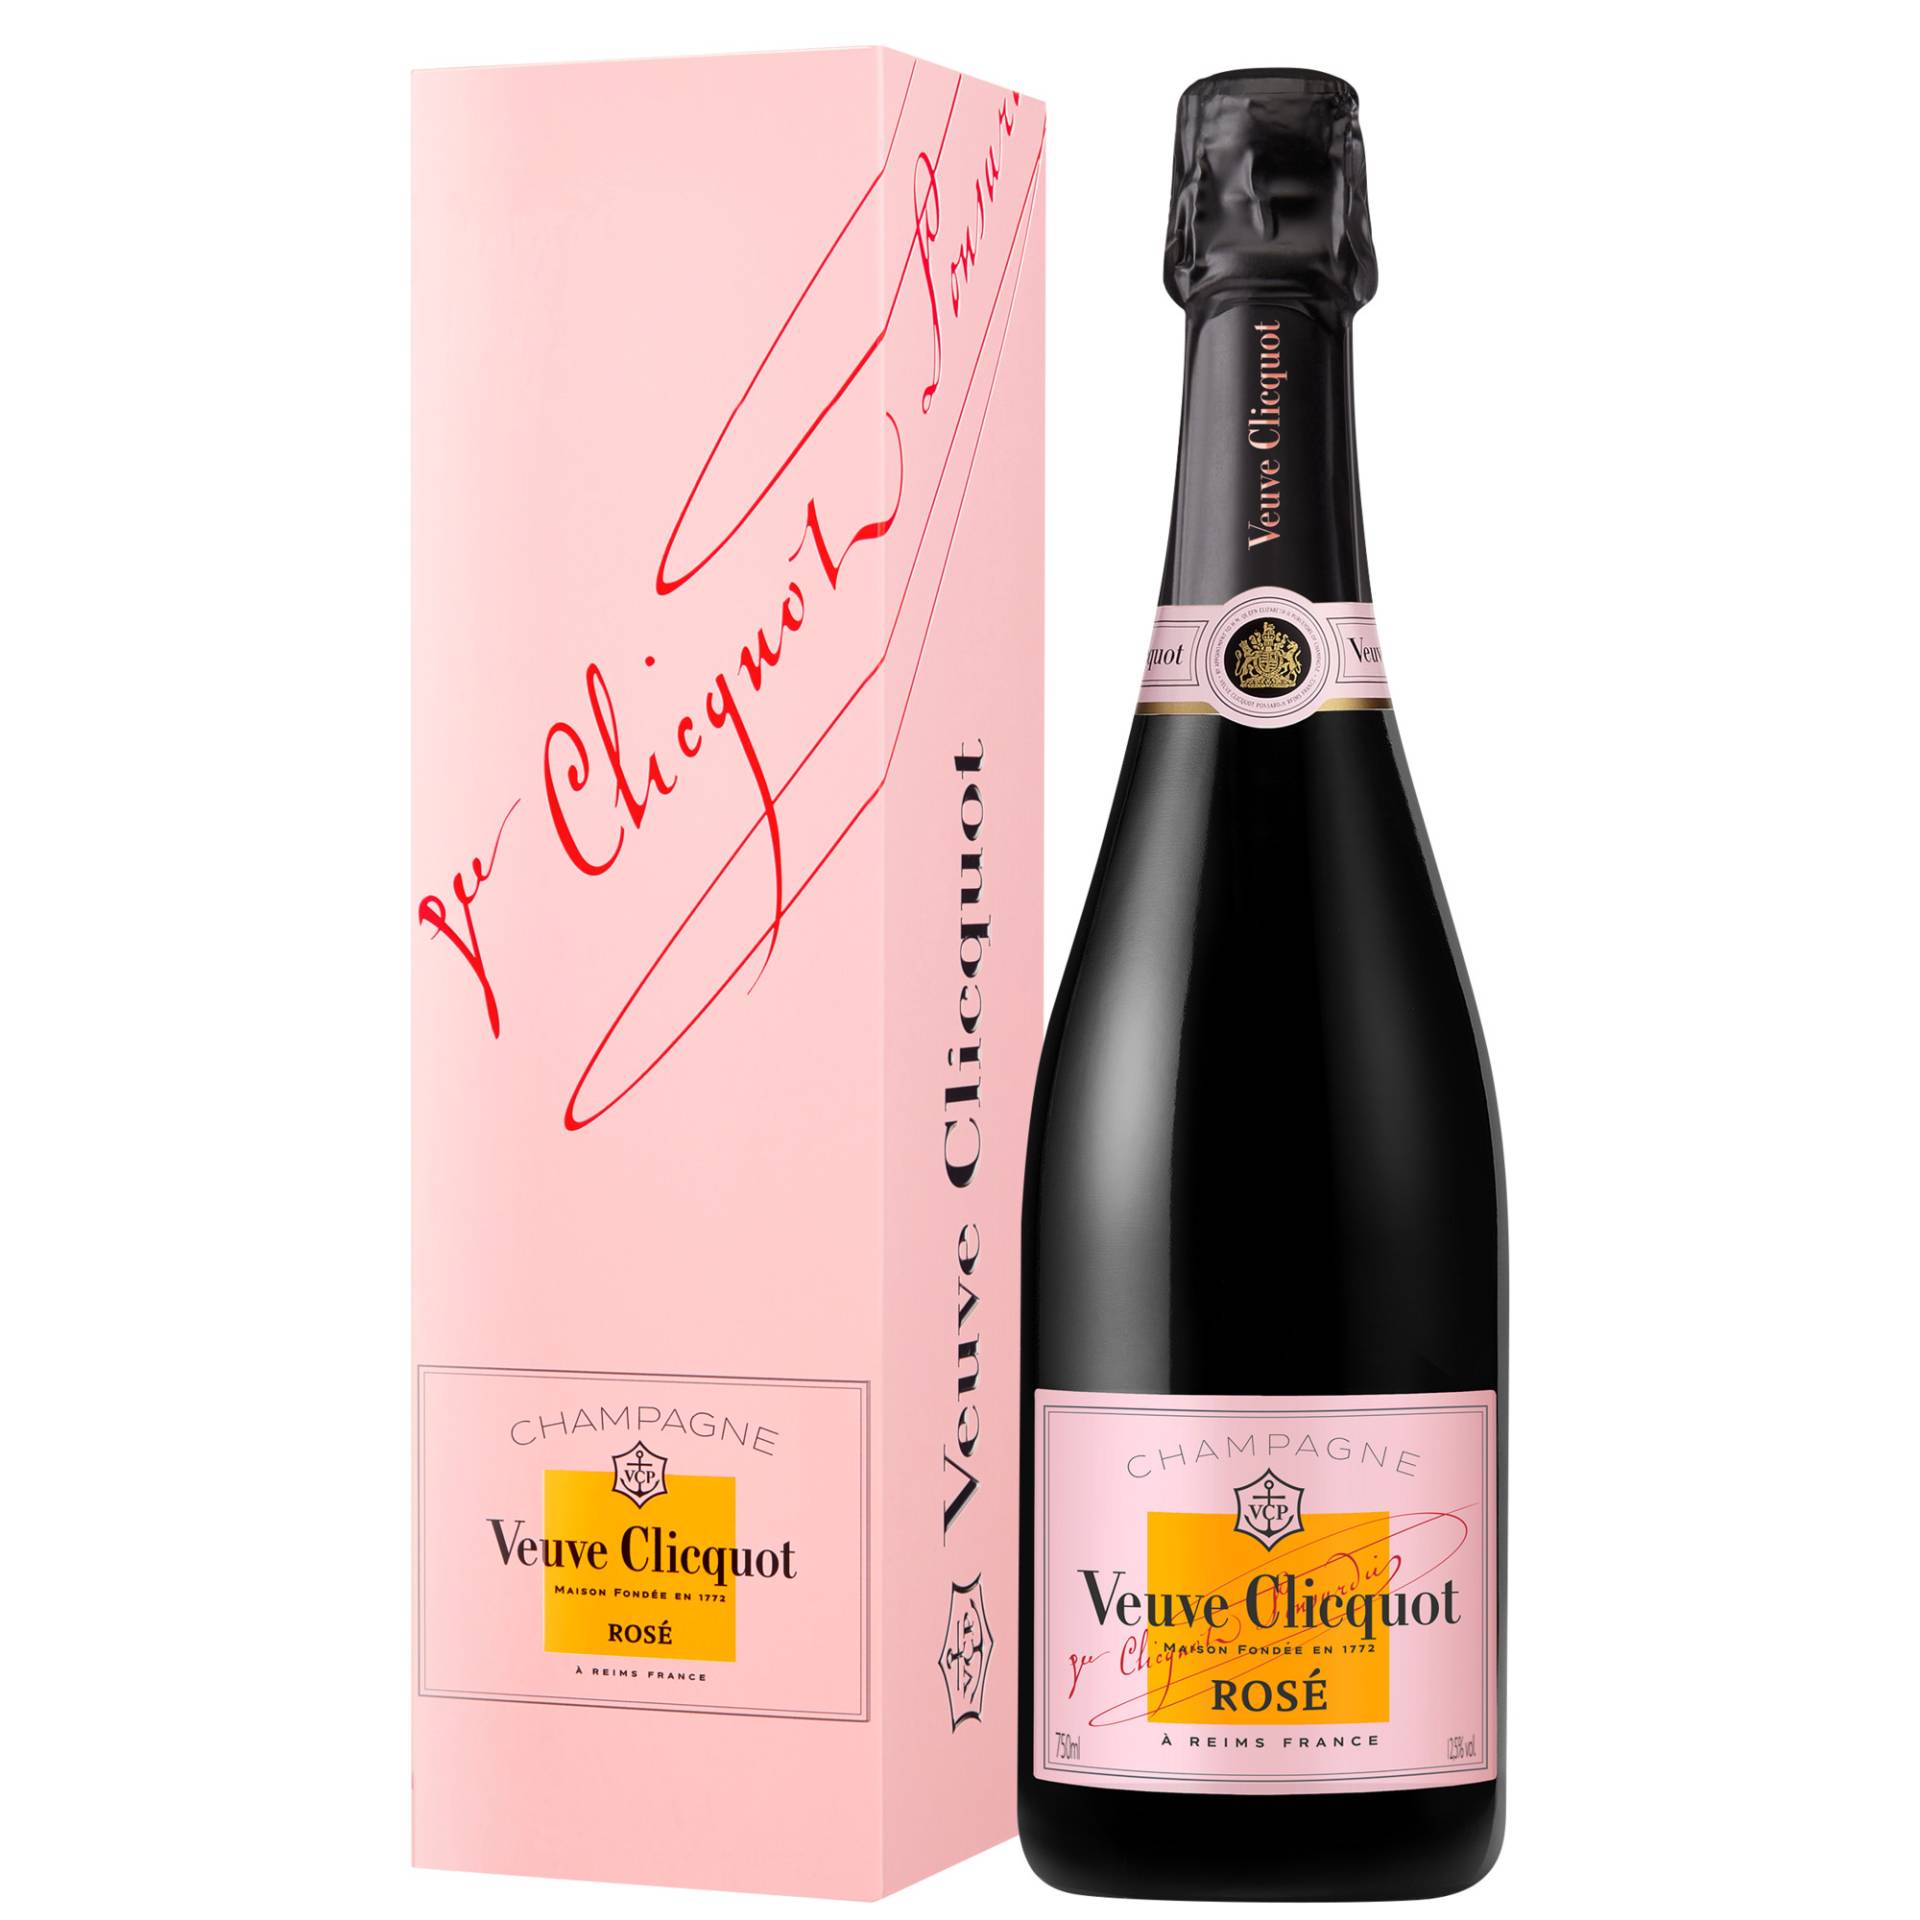 Champagne Veuve Clicquot Ponsardin Rosé, Brut, Champagne AC, Geschenketui, Champagne, Schaumwein von Champagne Veuve Clicquot, Reims, France